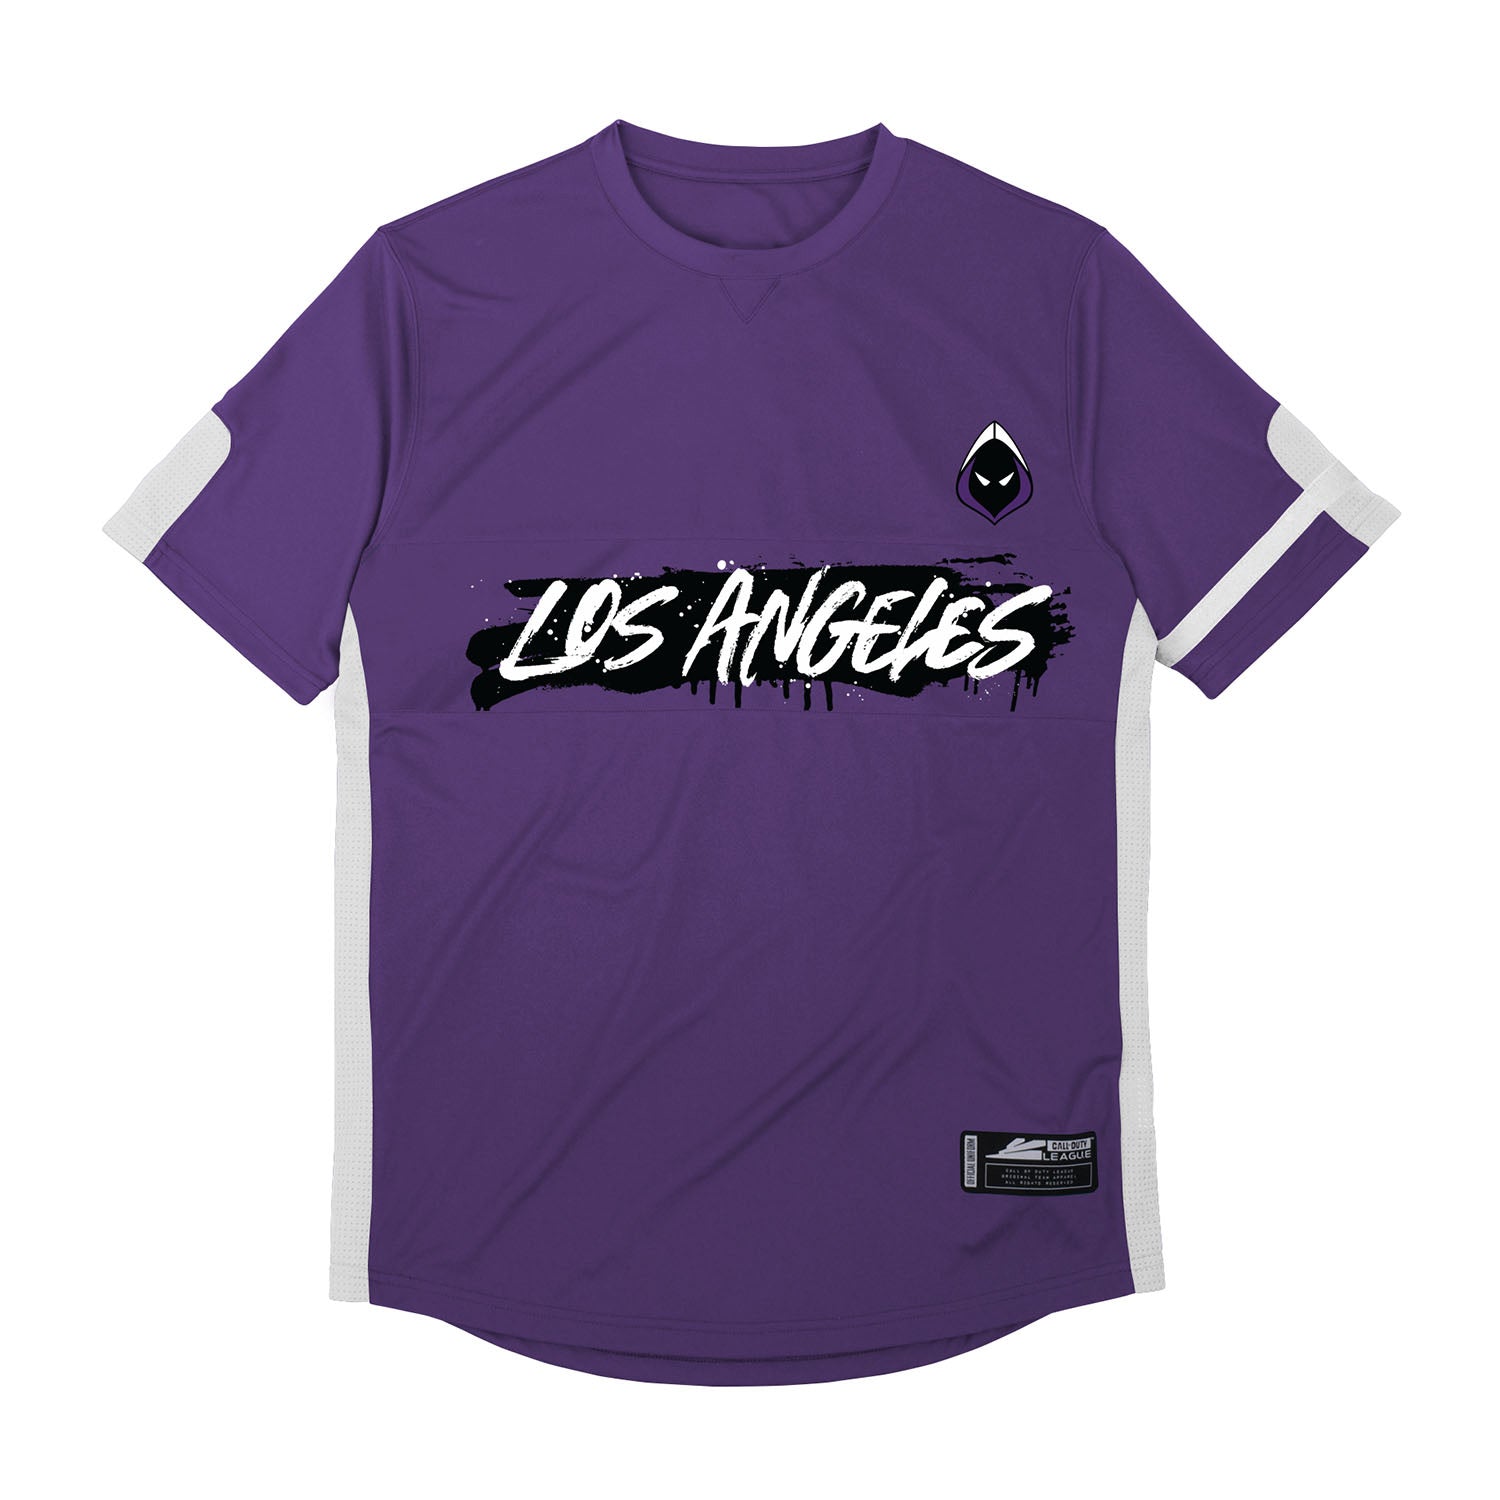 Los Angeles Guerrillas Purple Jersey - Front View